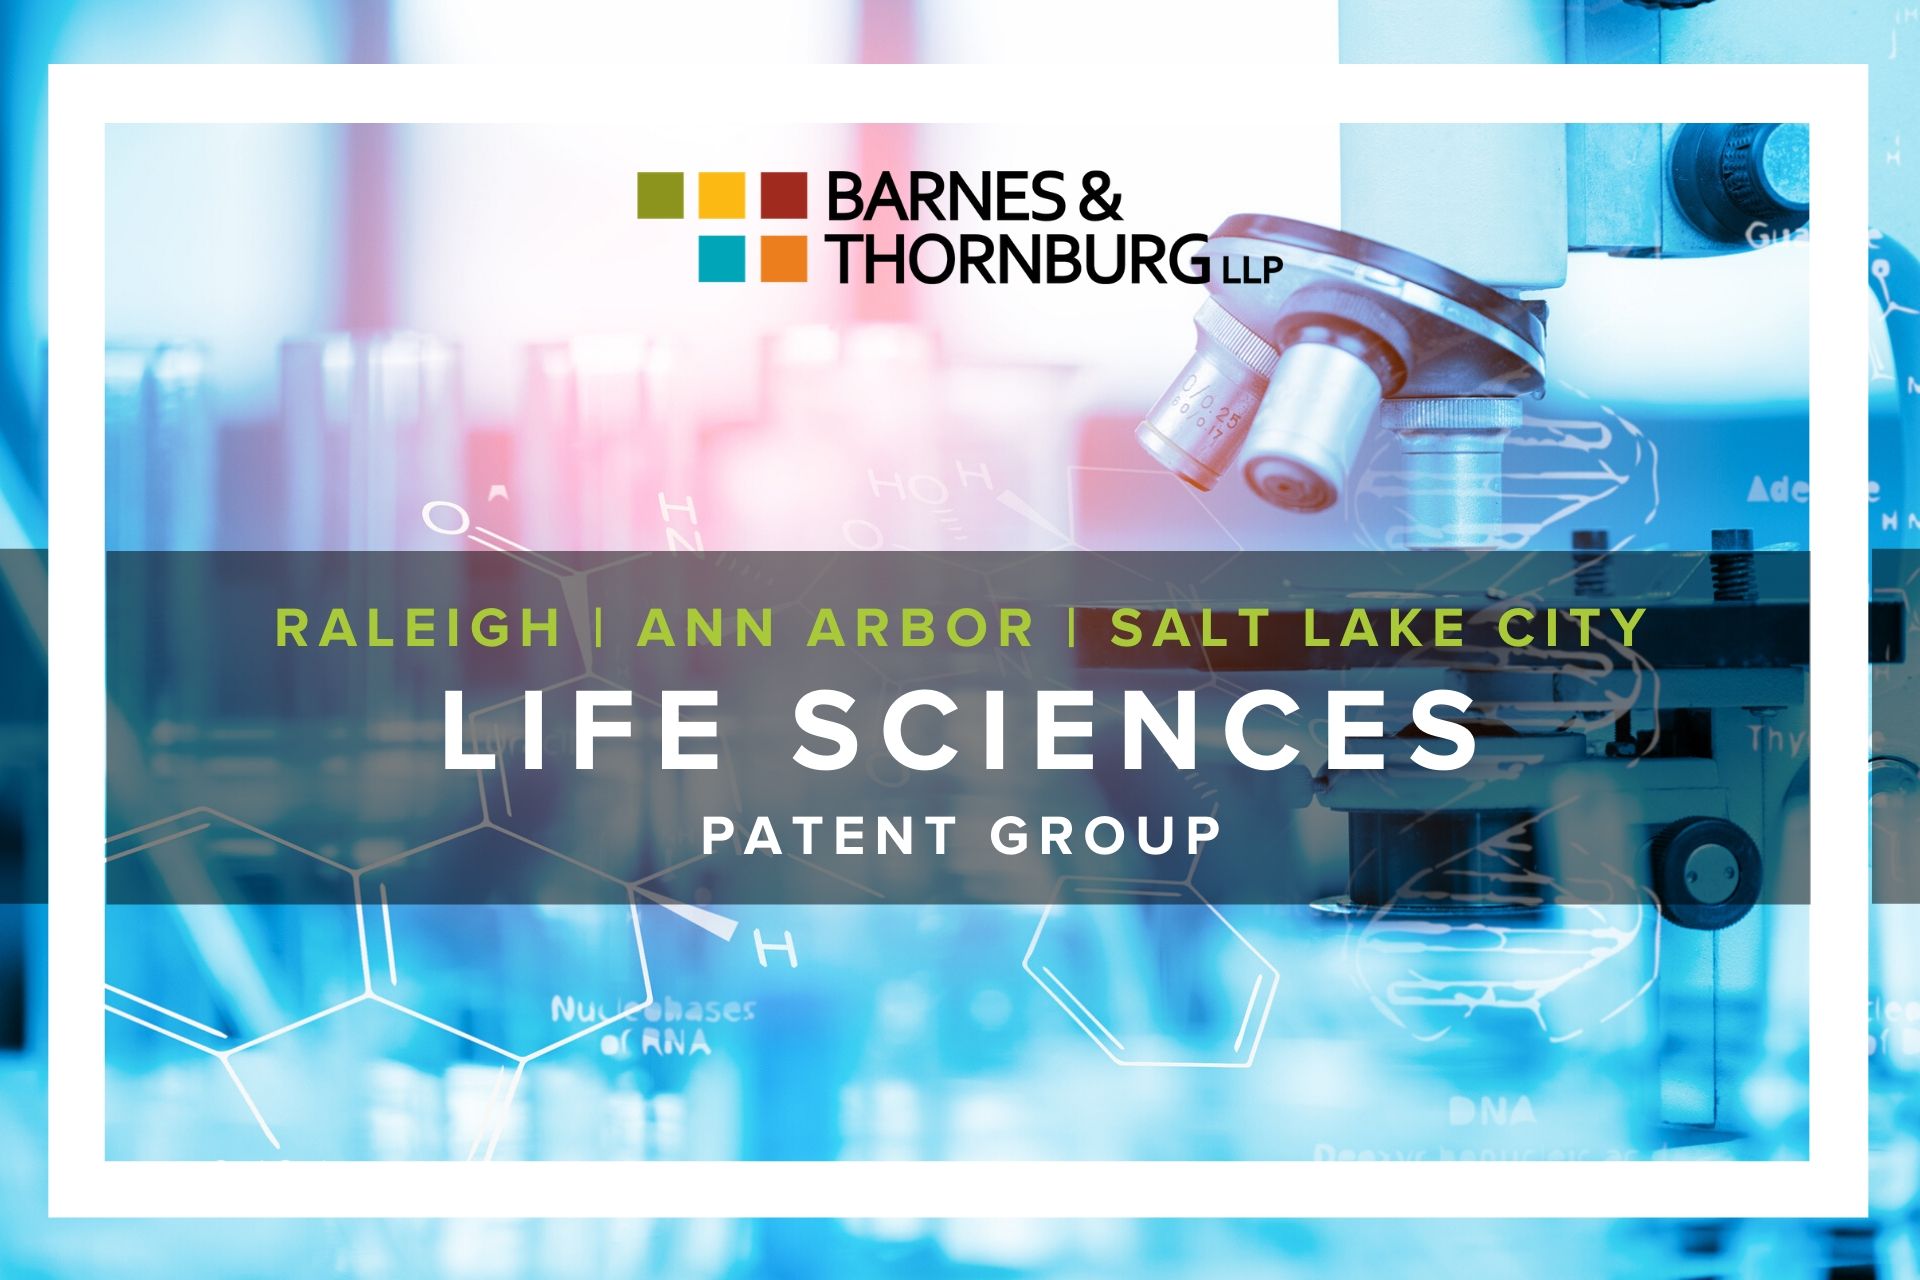 Barnes & Thornburg Life Sciences Patent Group